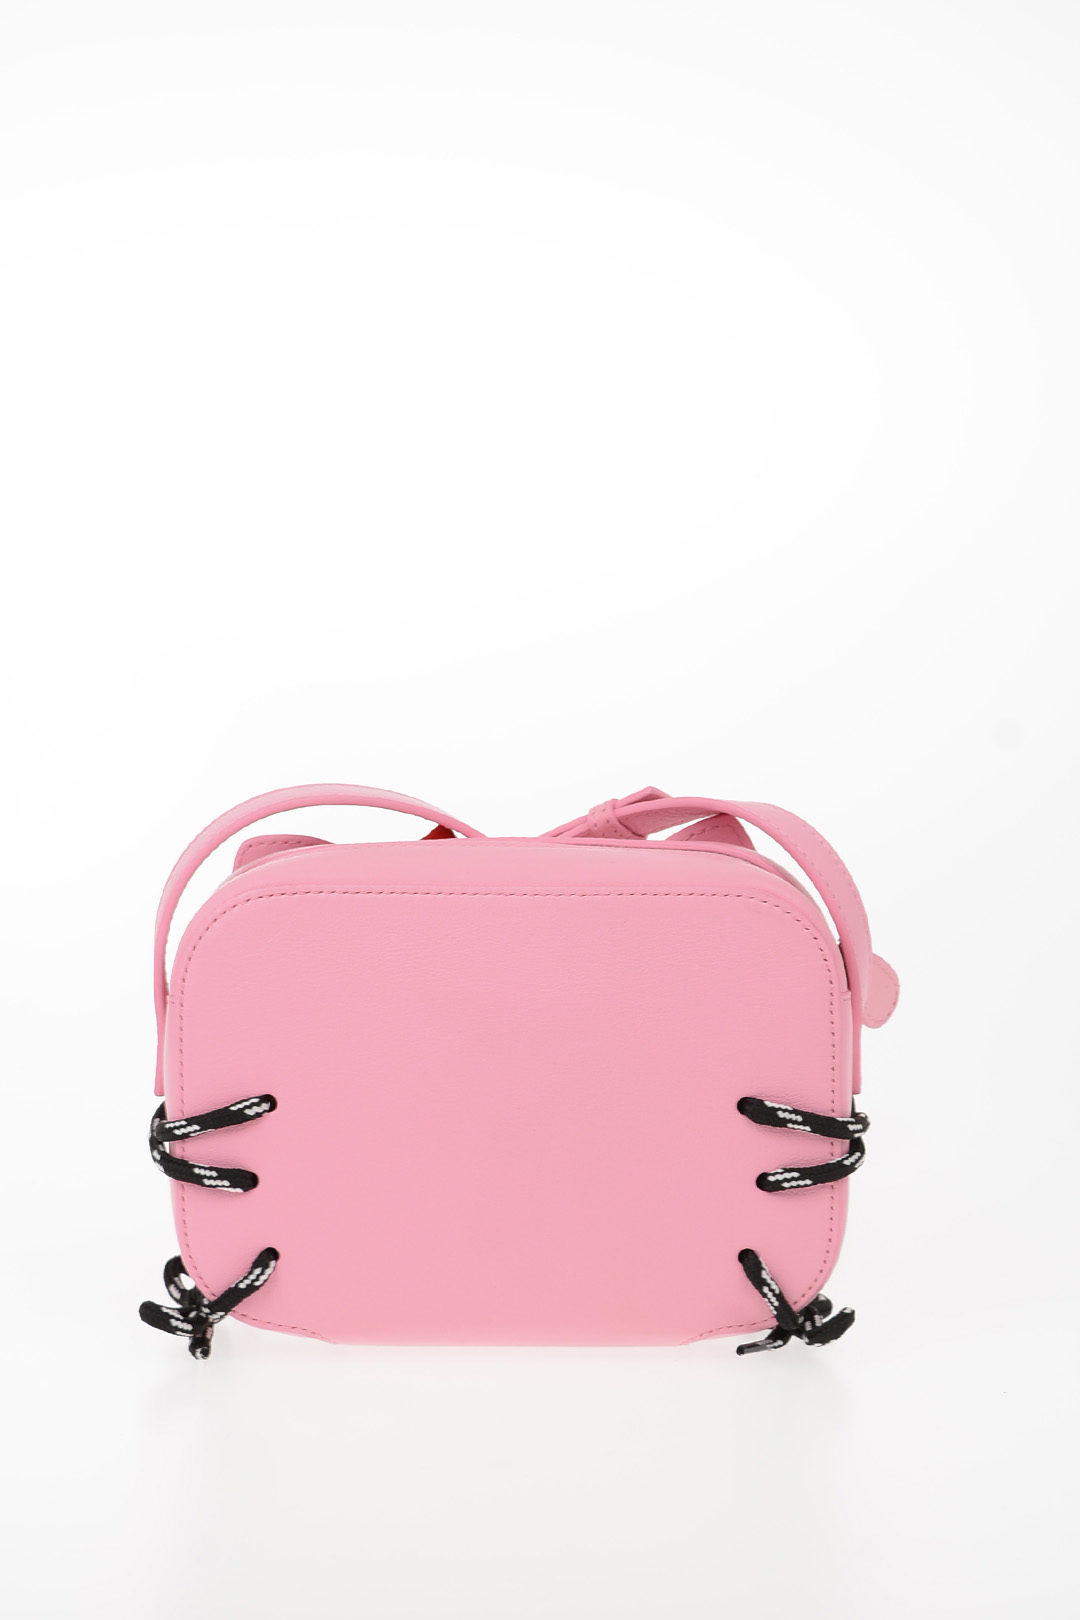 Balenciaga Leather Hello Kitty Wallet - pink